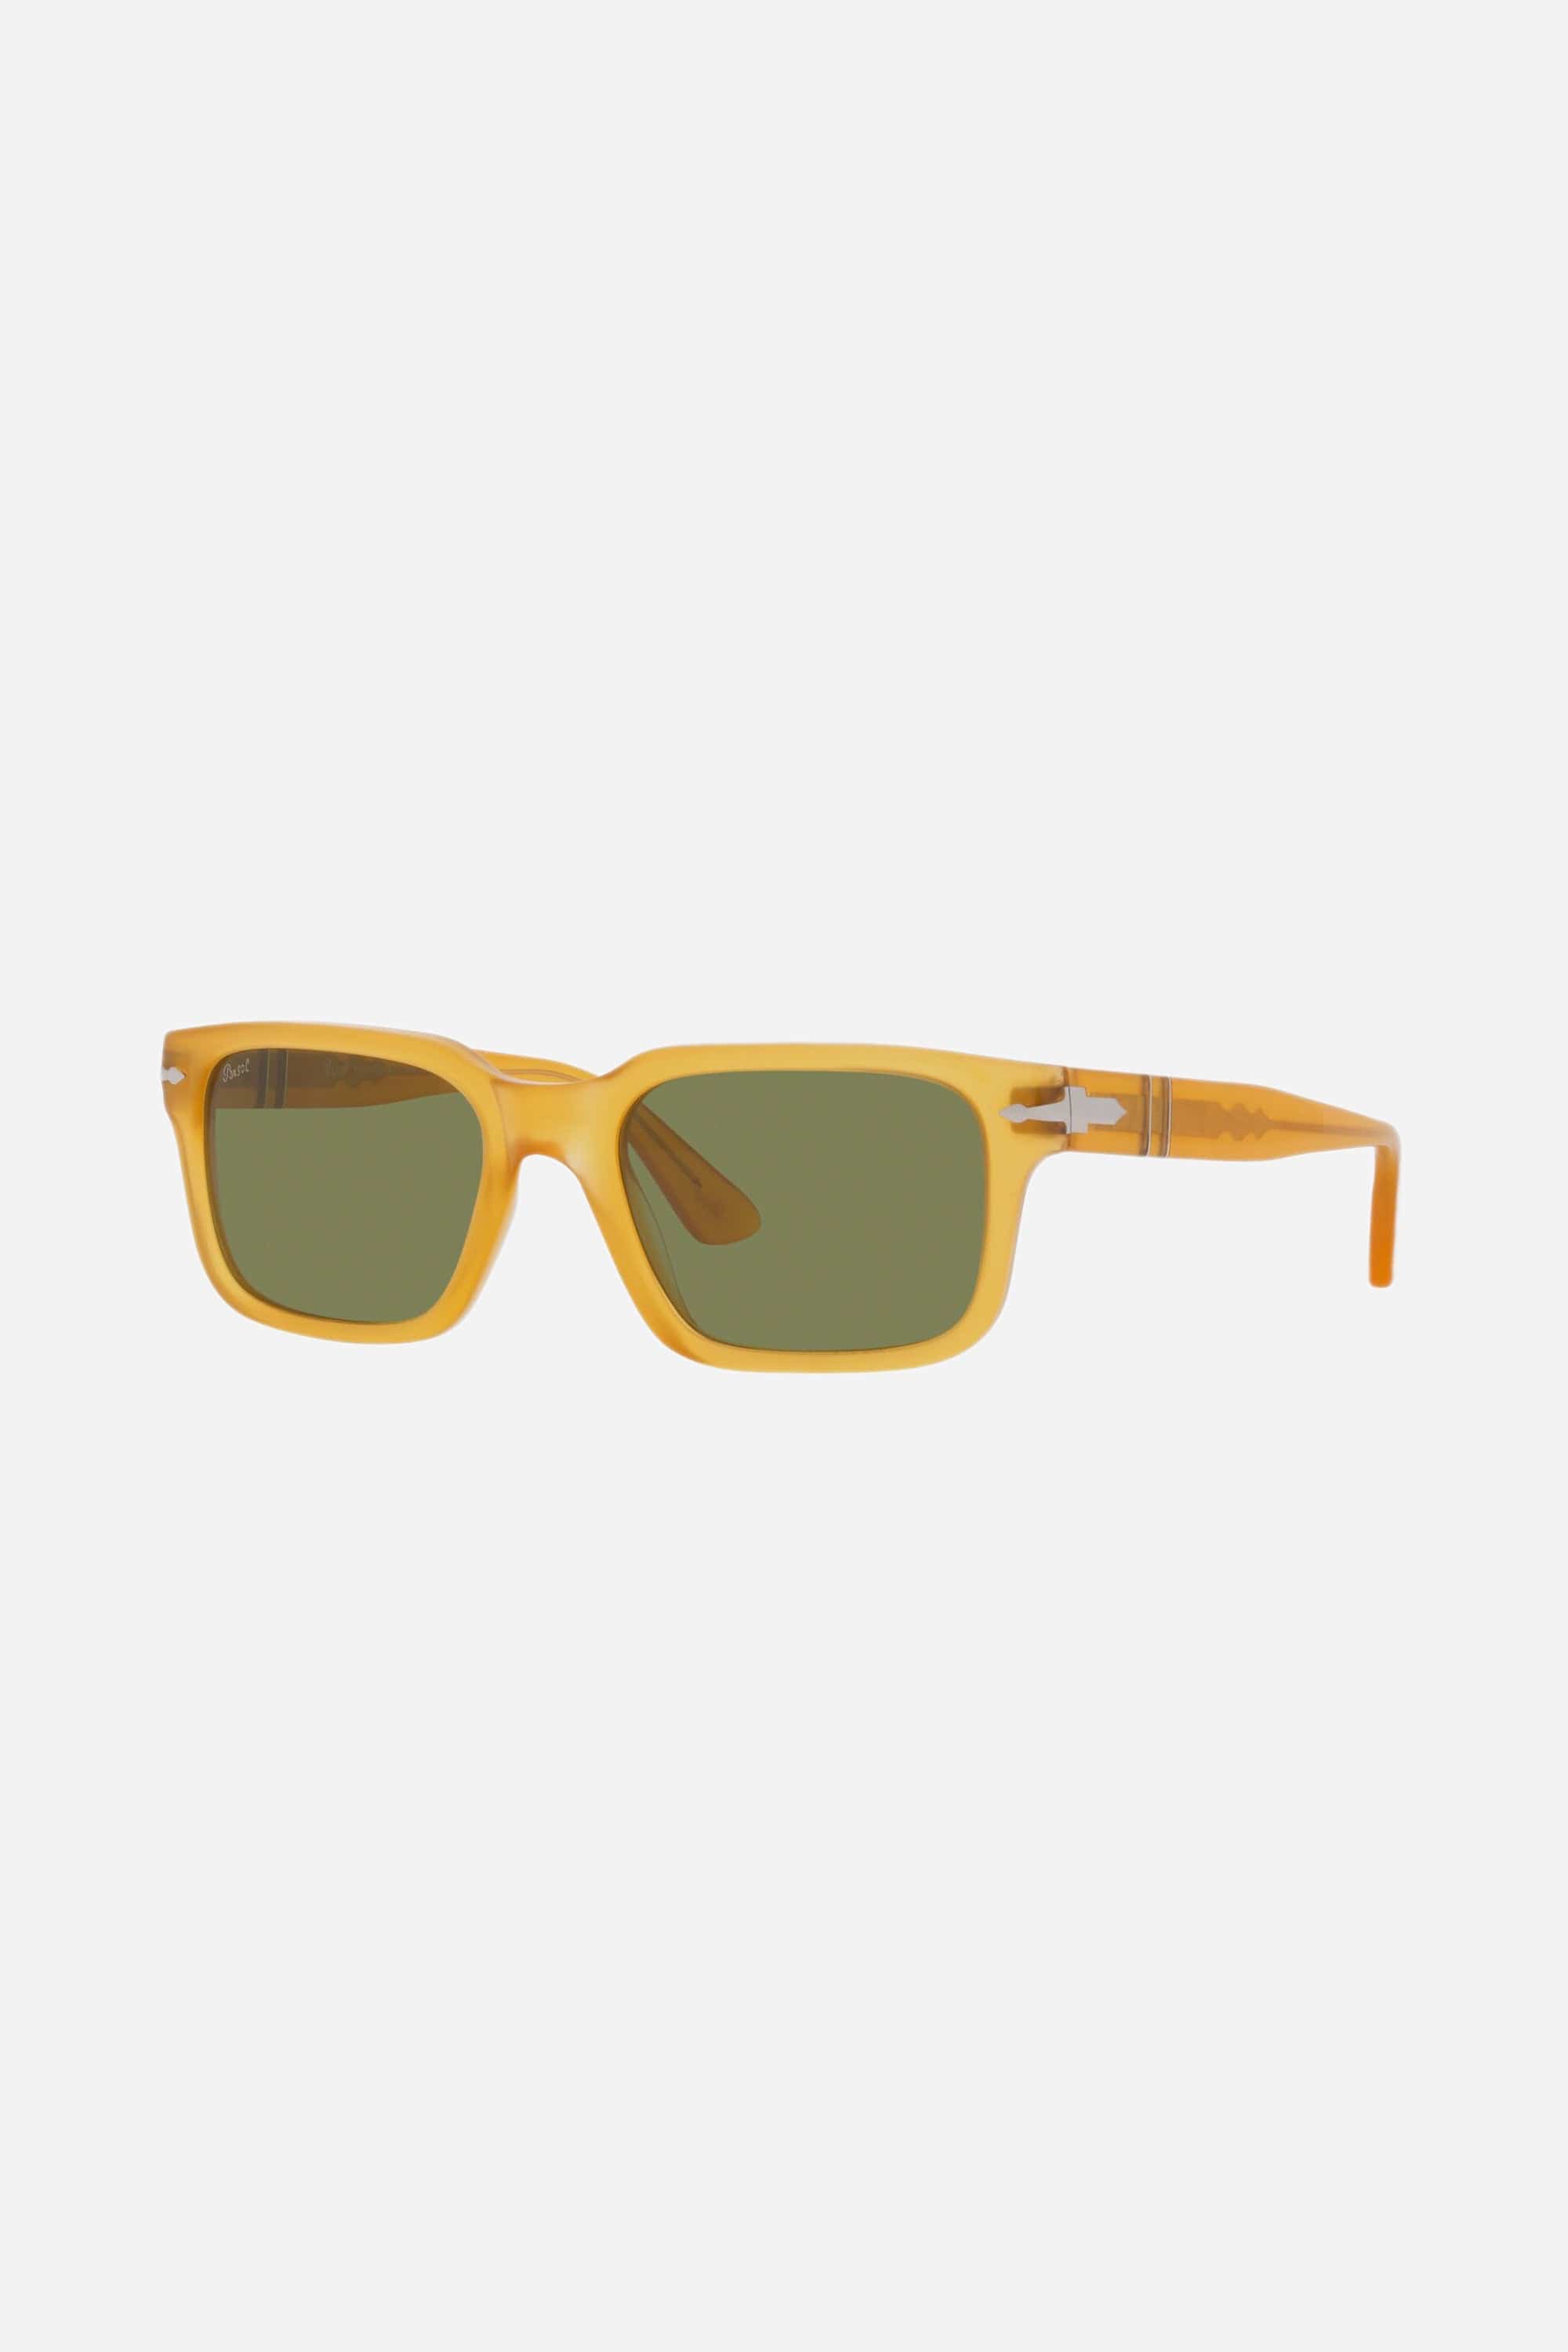 Persol squared yellow sunglasses - Eyewear Club